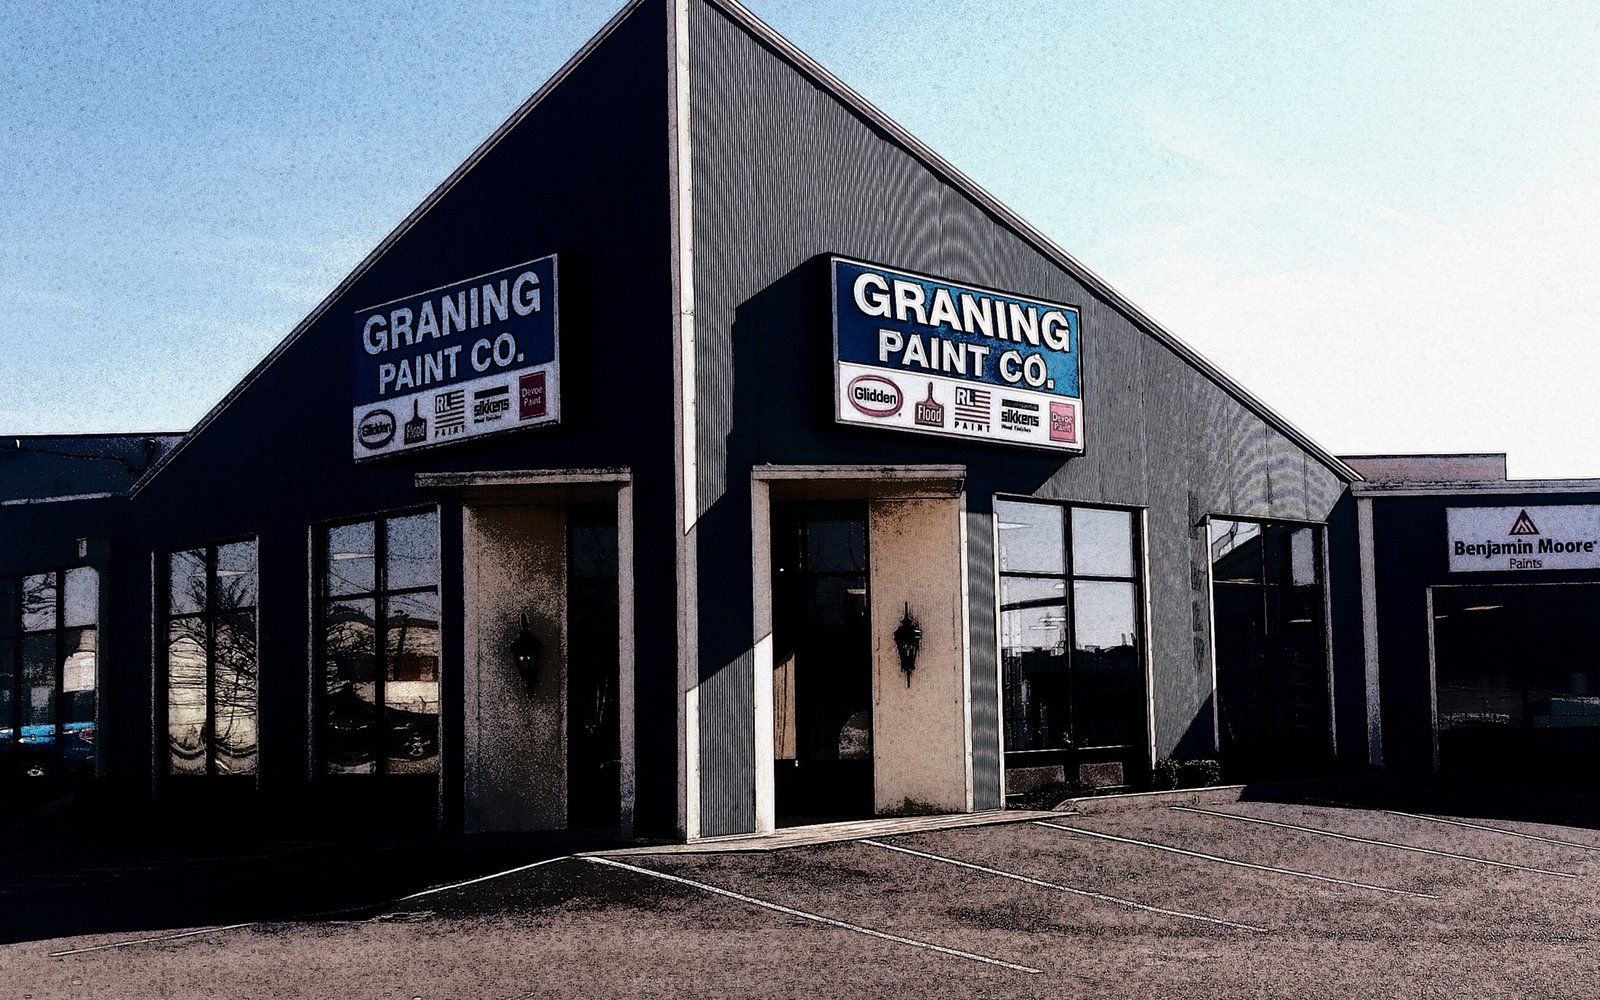 Graning Paint Company